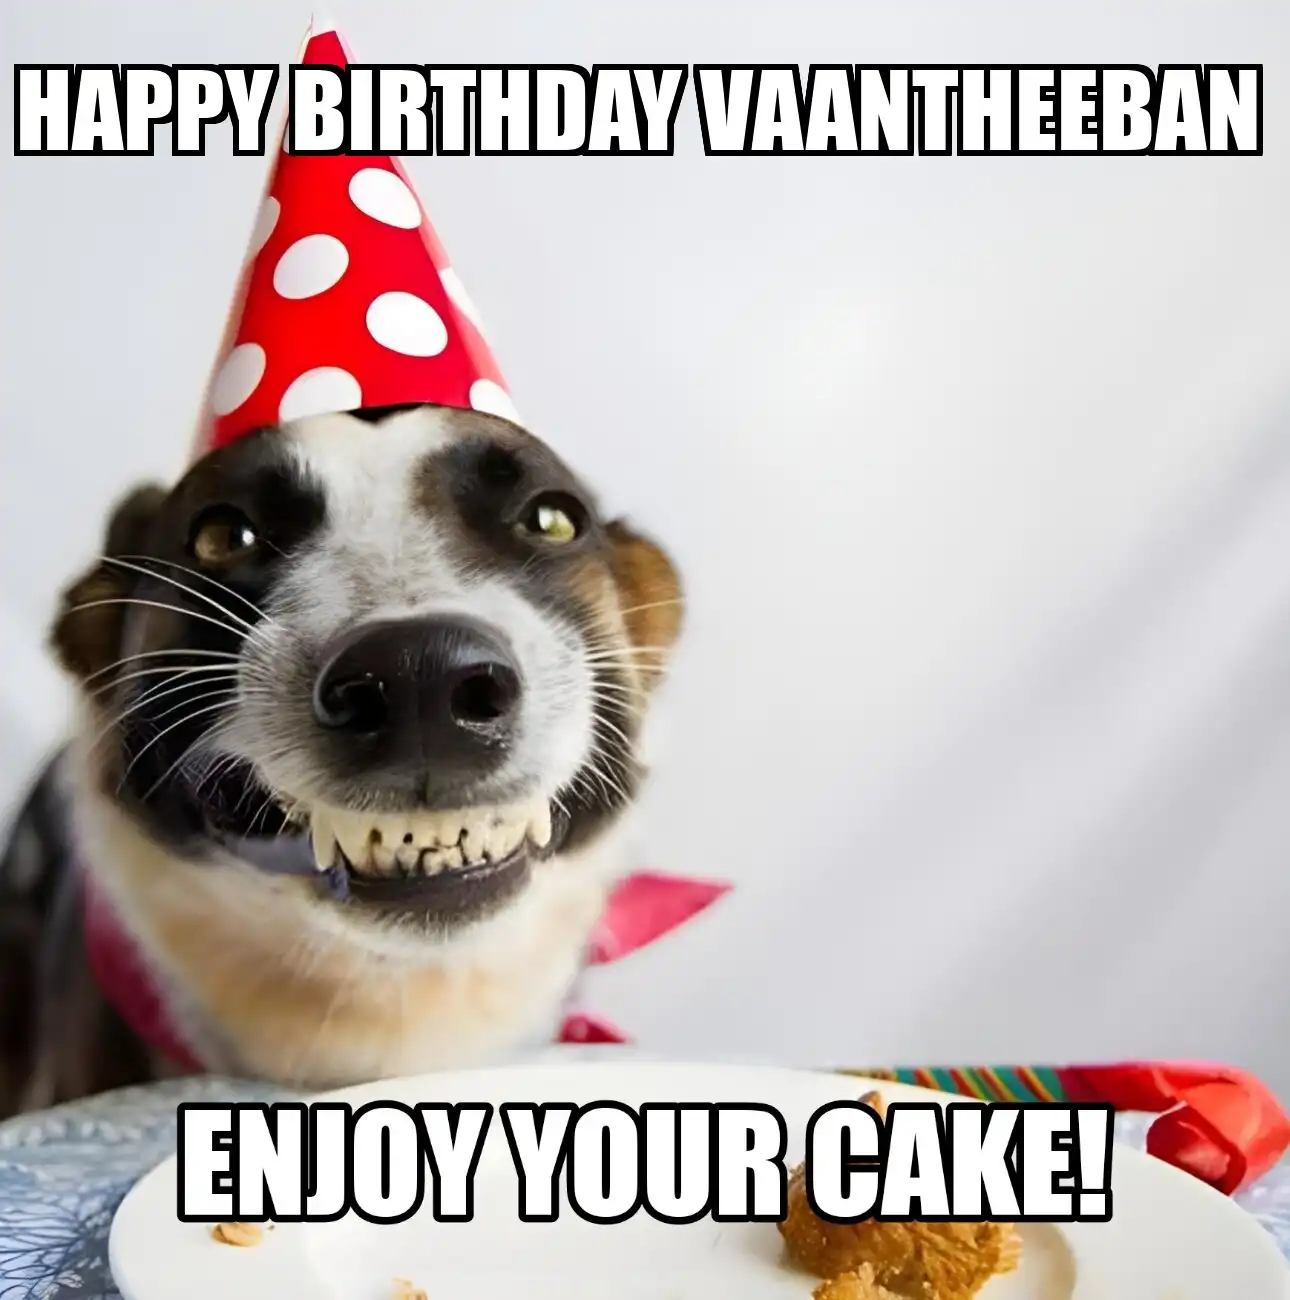 Happy Birthday Vaantheeban Enjoy Your Cake Dog Meme